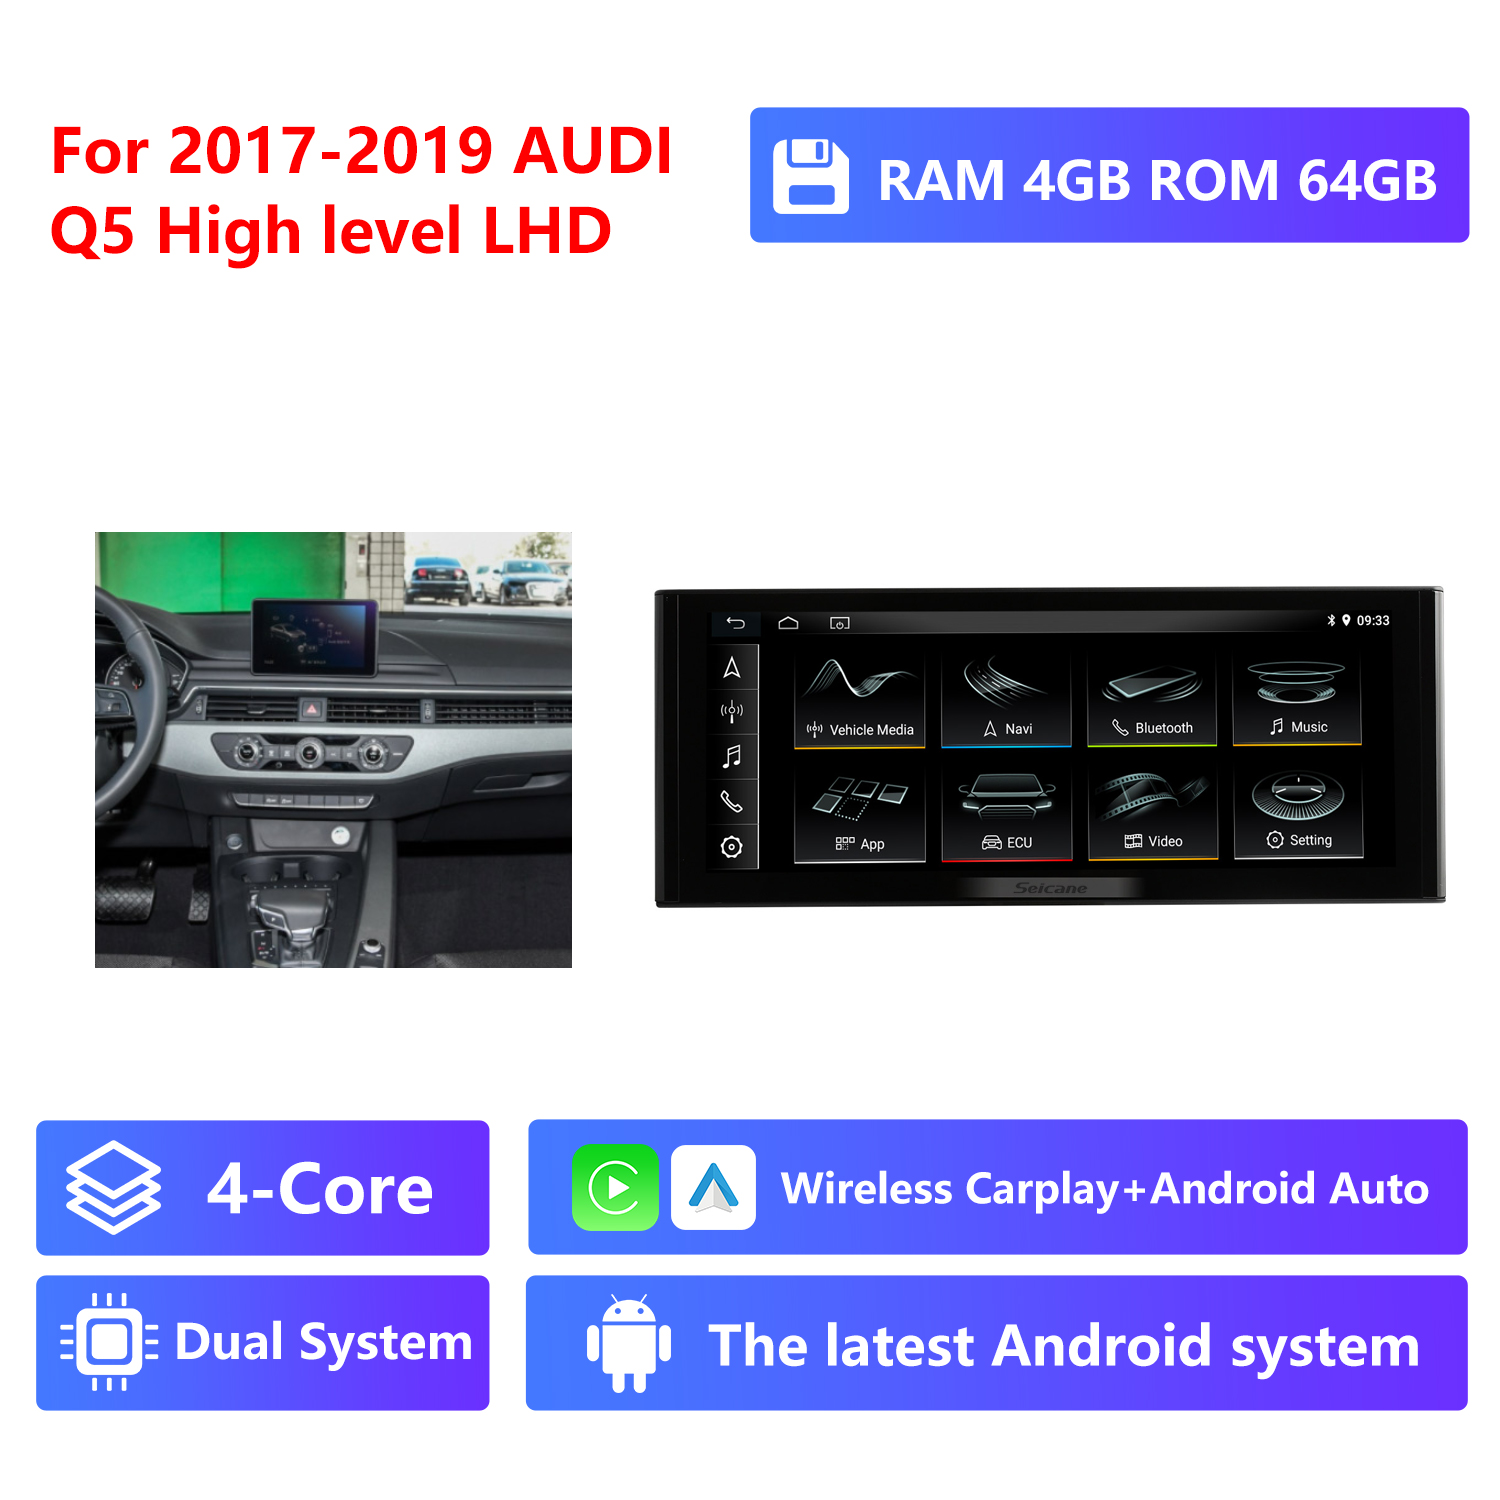 4-Core RAM 4G ROM 64G,2017-2019,High version,LHD